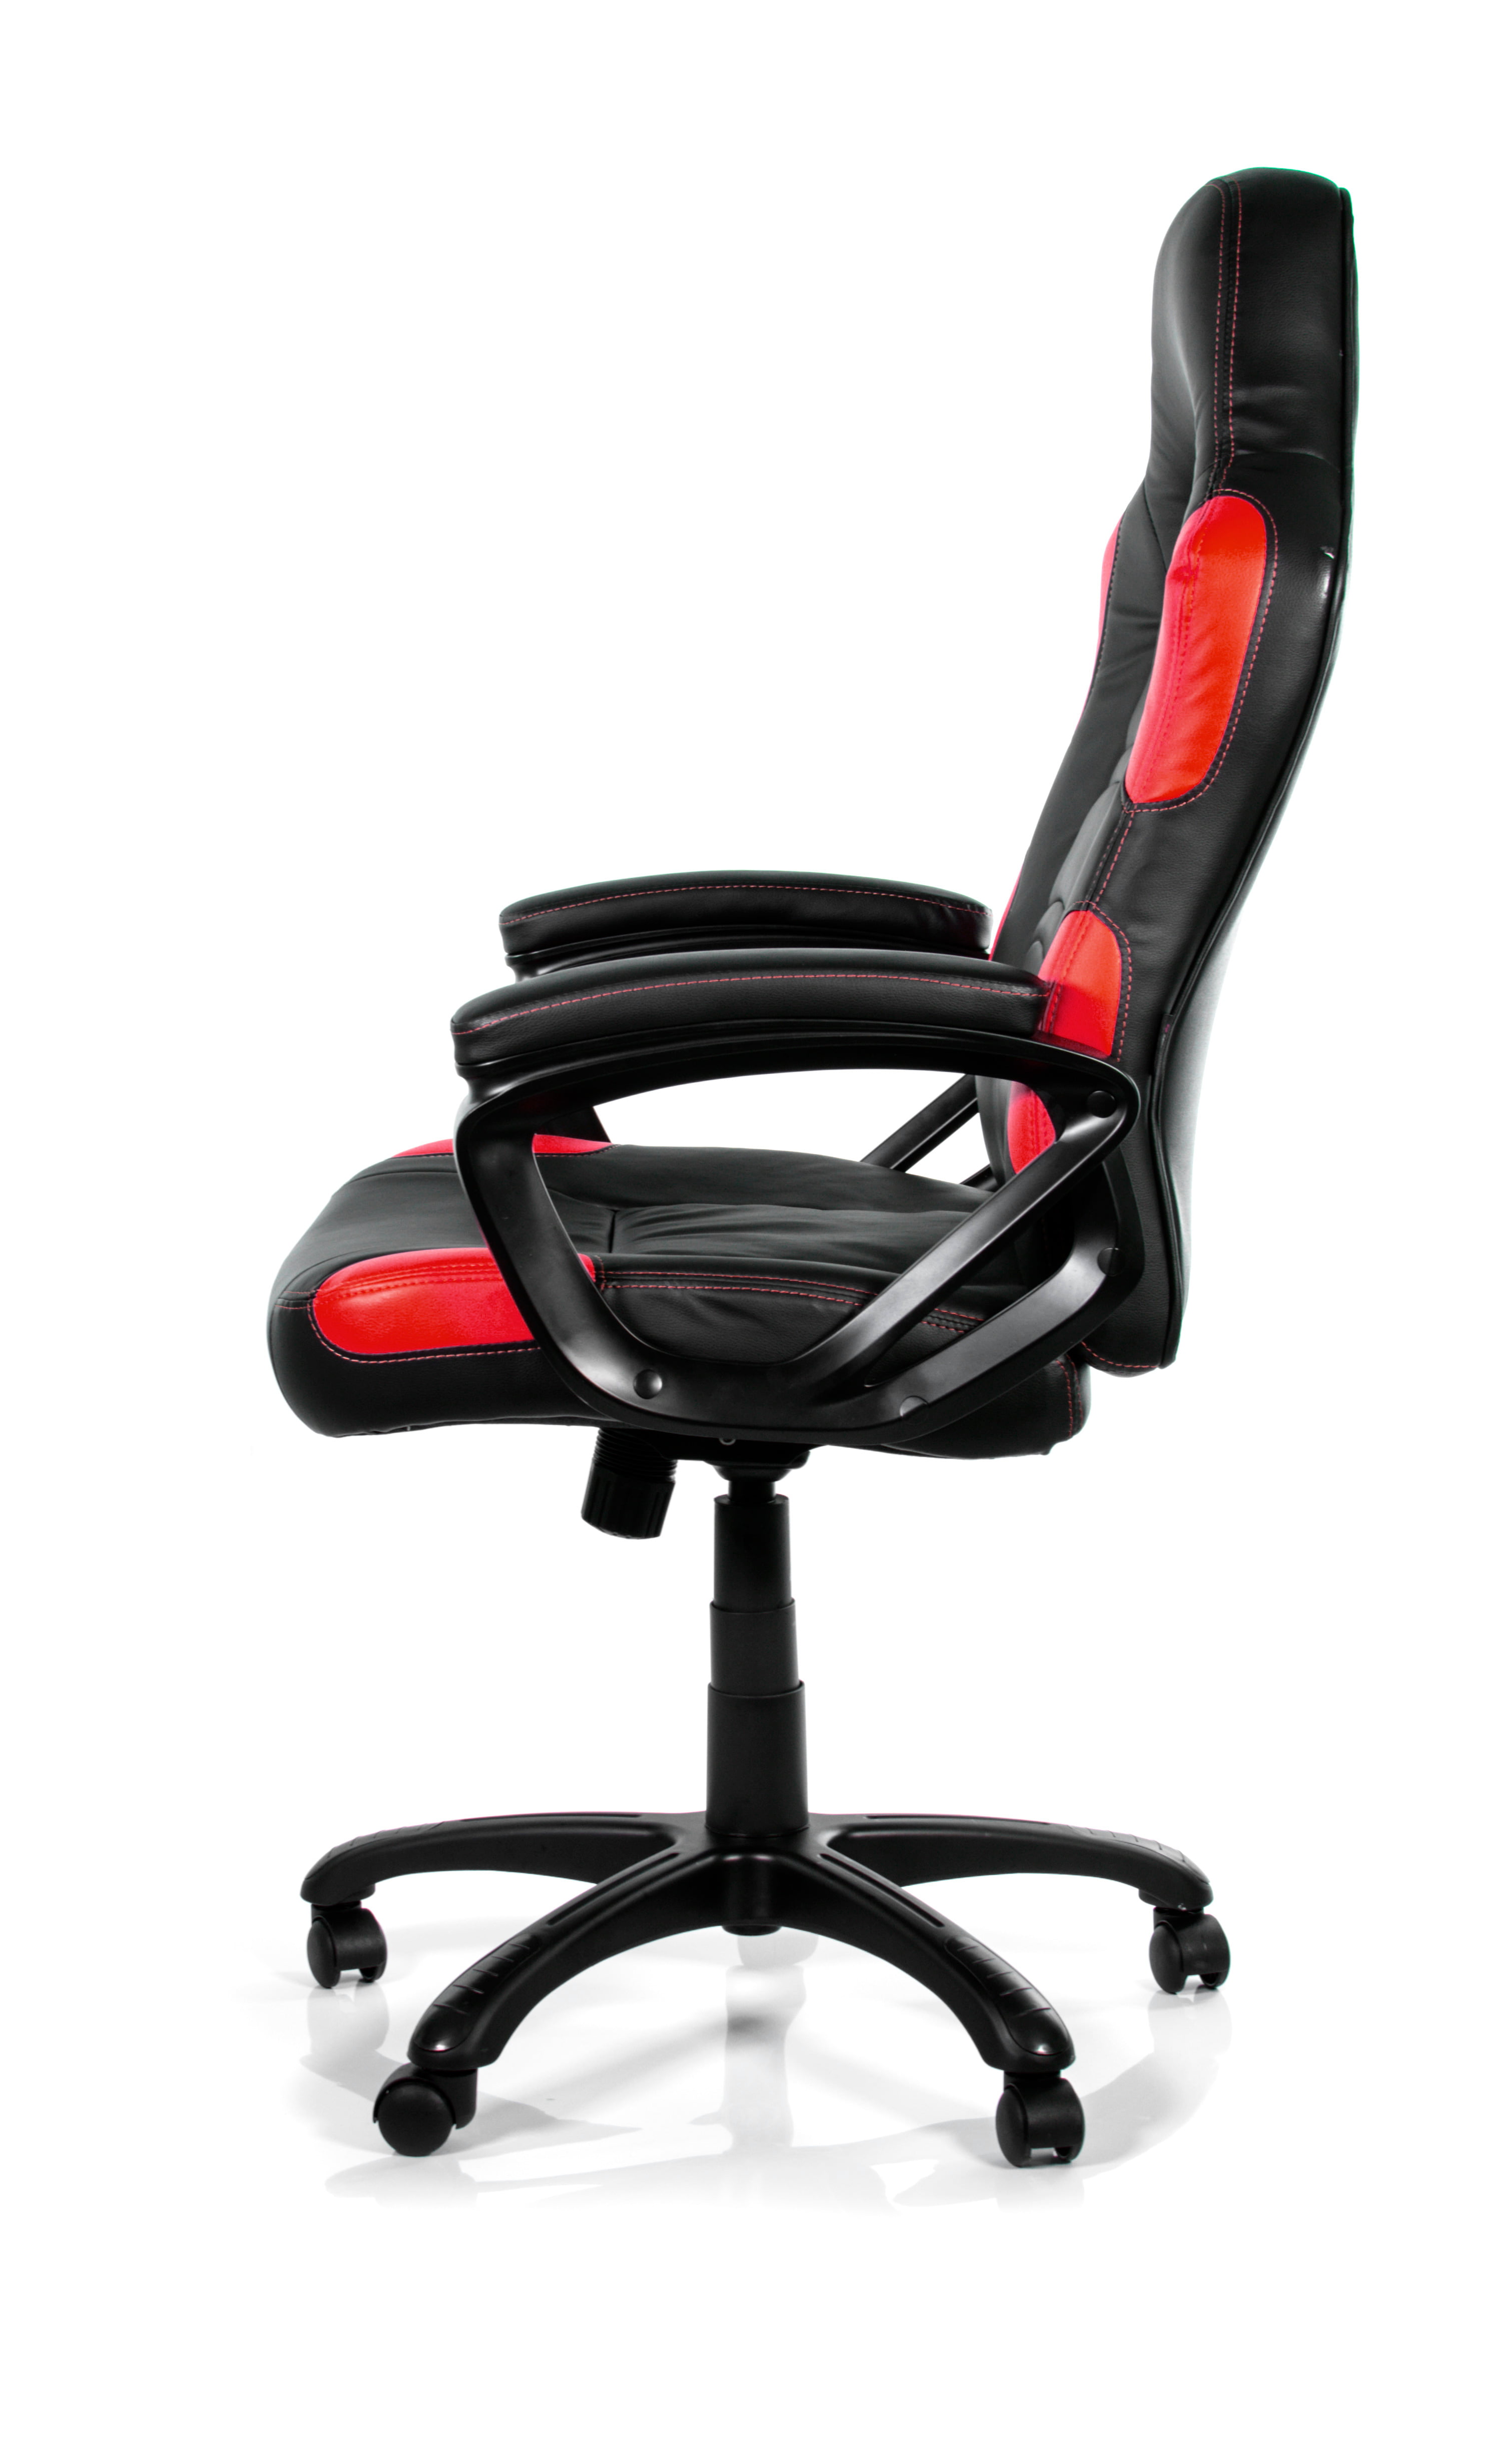 Enzo Gaming Chair, Red - Walmart.com